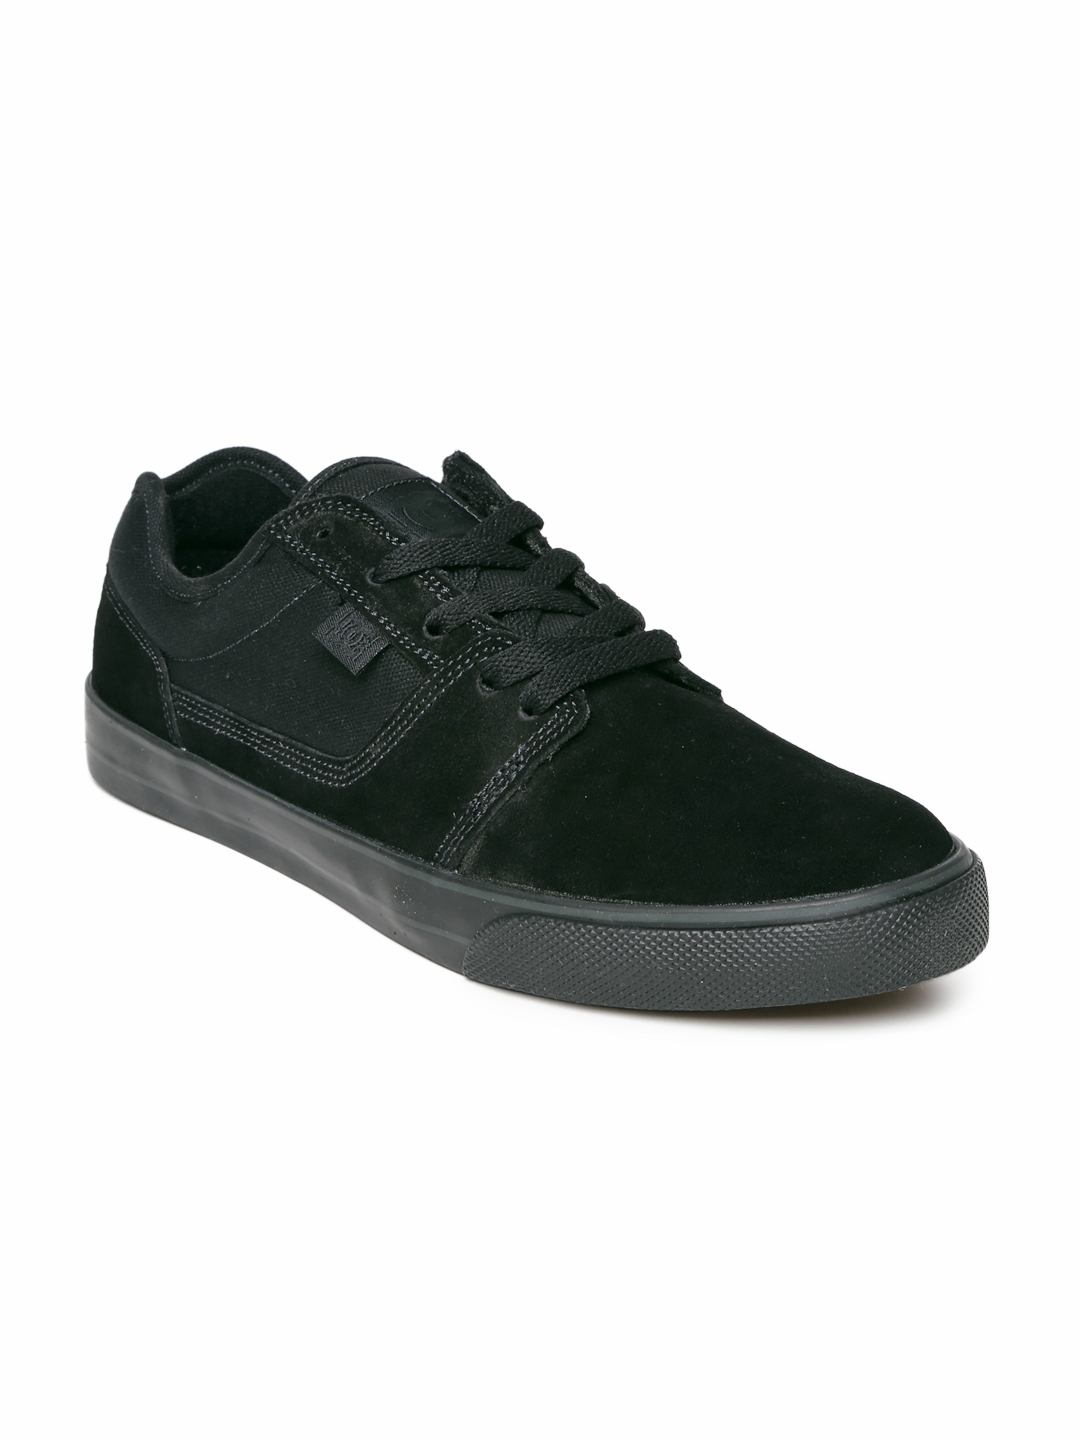 Buy DC Men Black Suede Casual Shoes Casual Shoes for Men